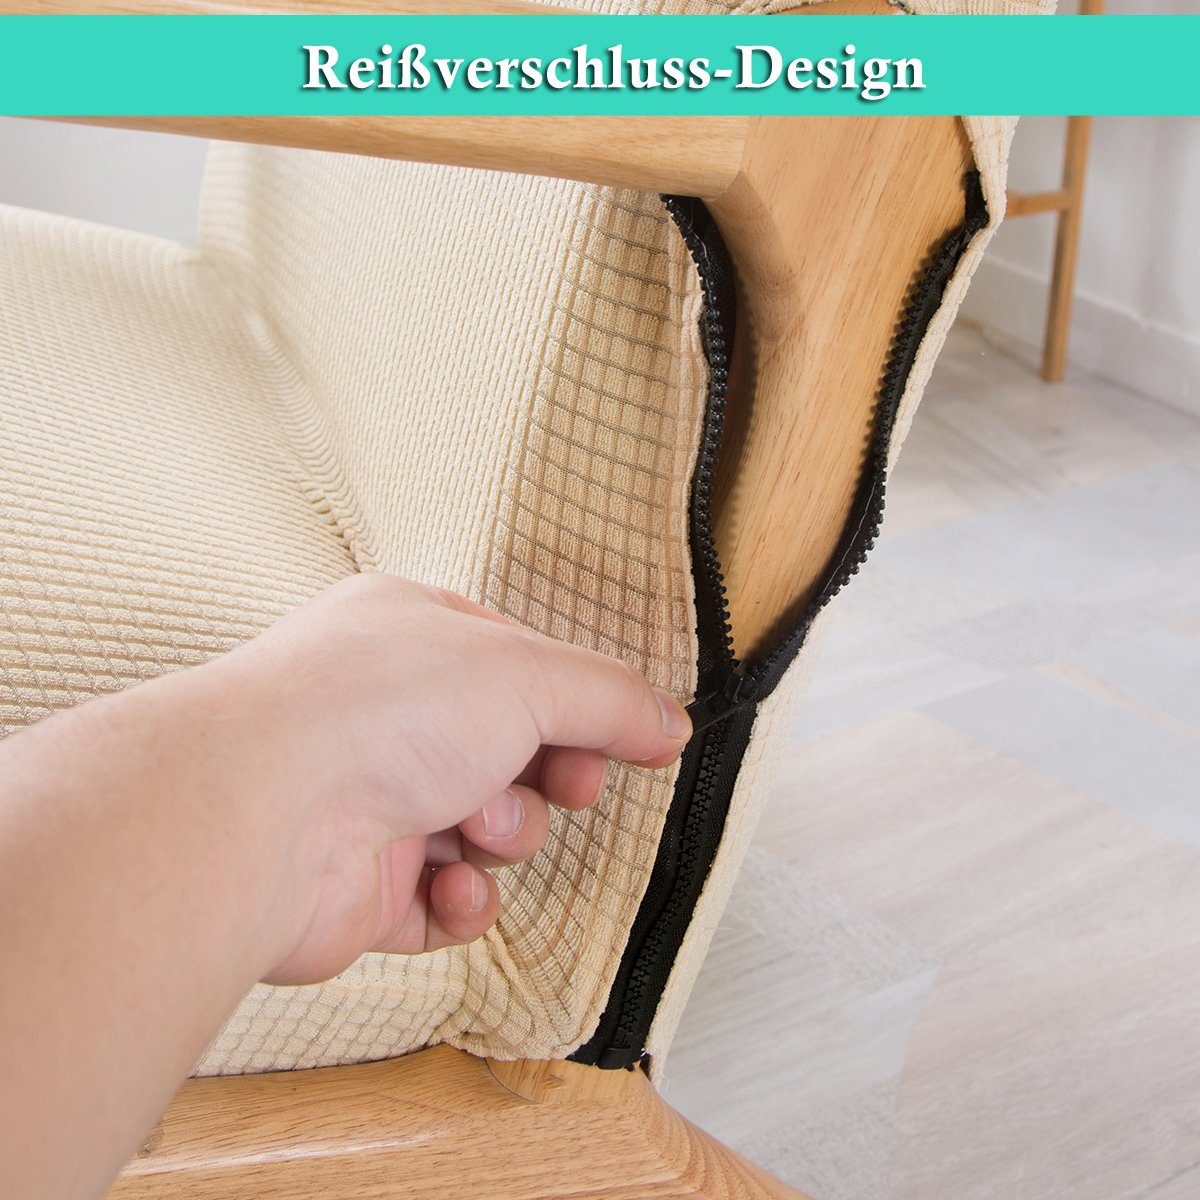 Qelus, Sesselbezug Wohnkultur Reißverschluss Stuhlhusse Stuhlbezug, Beige Stretch